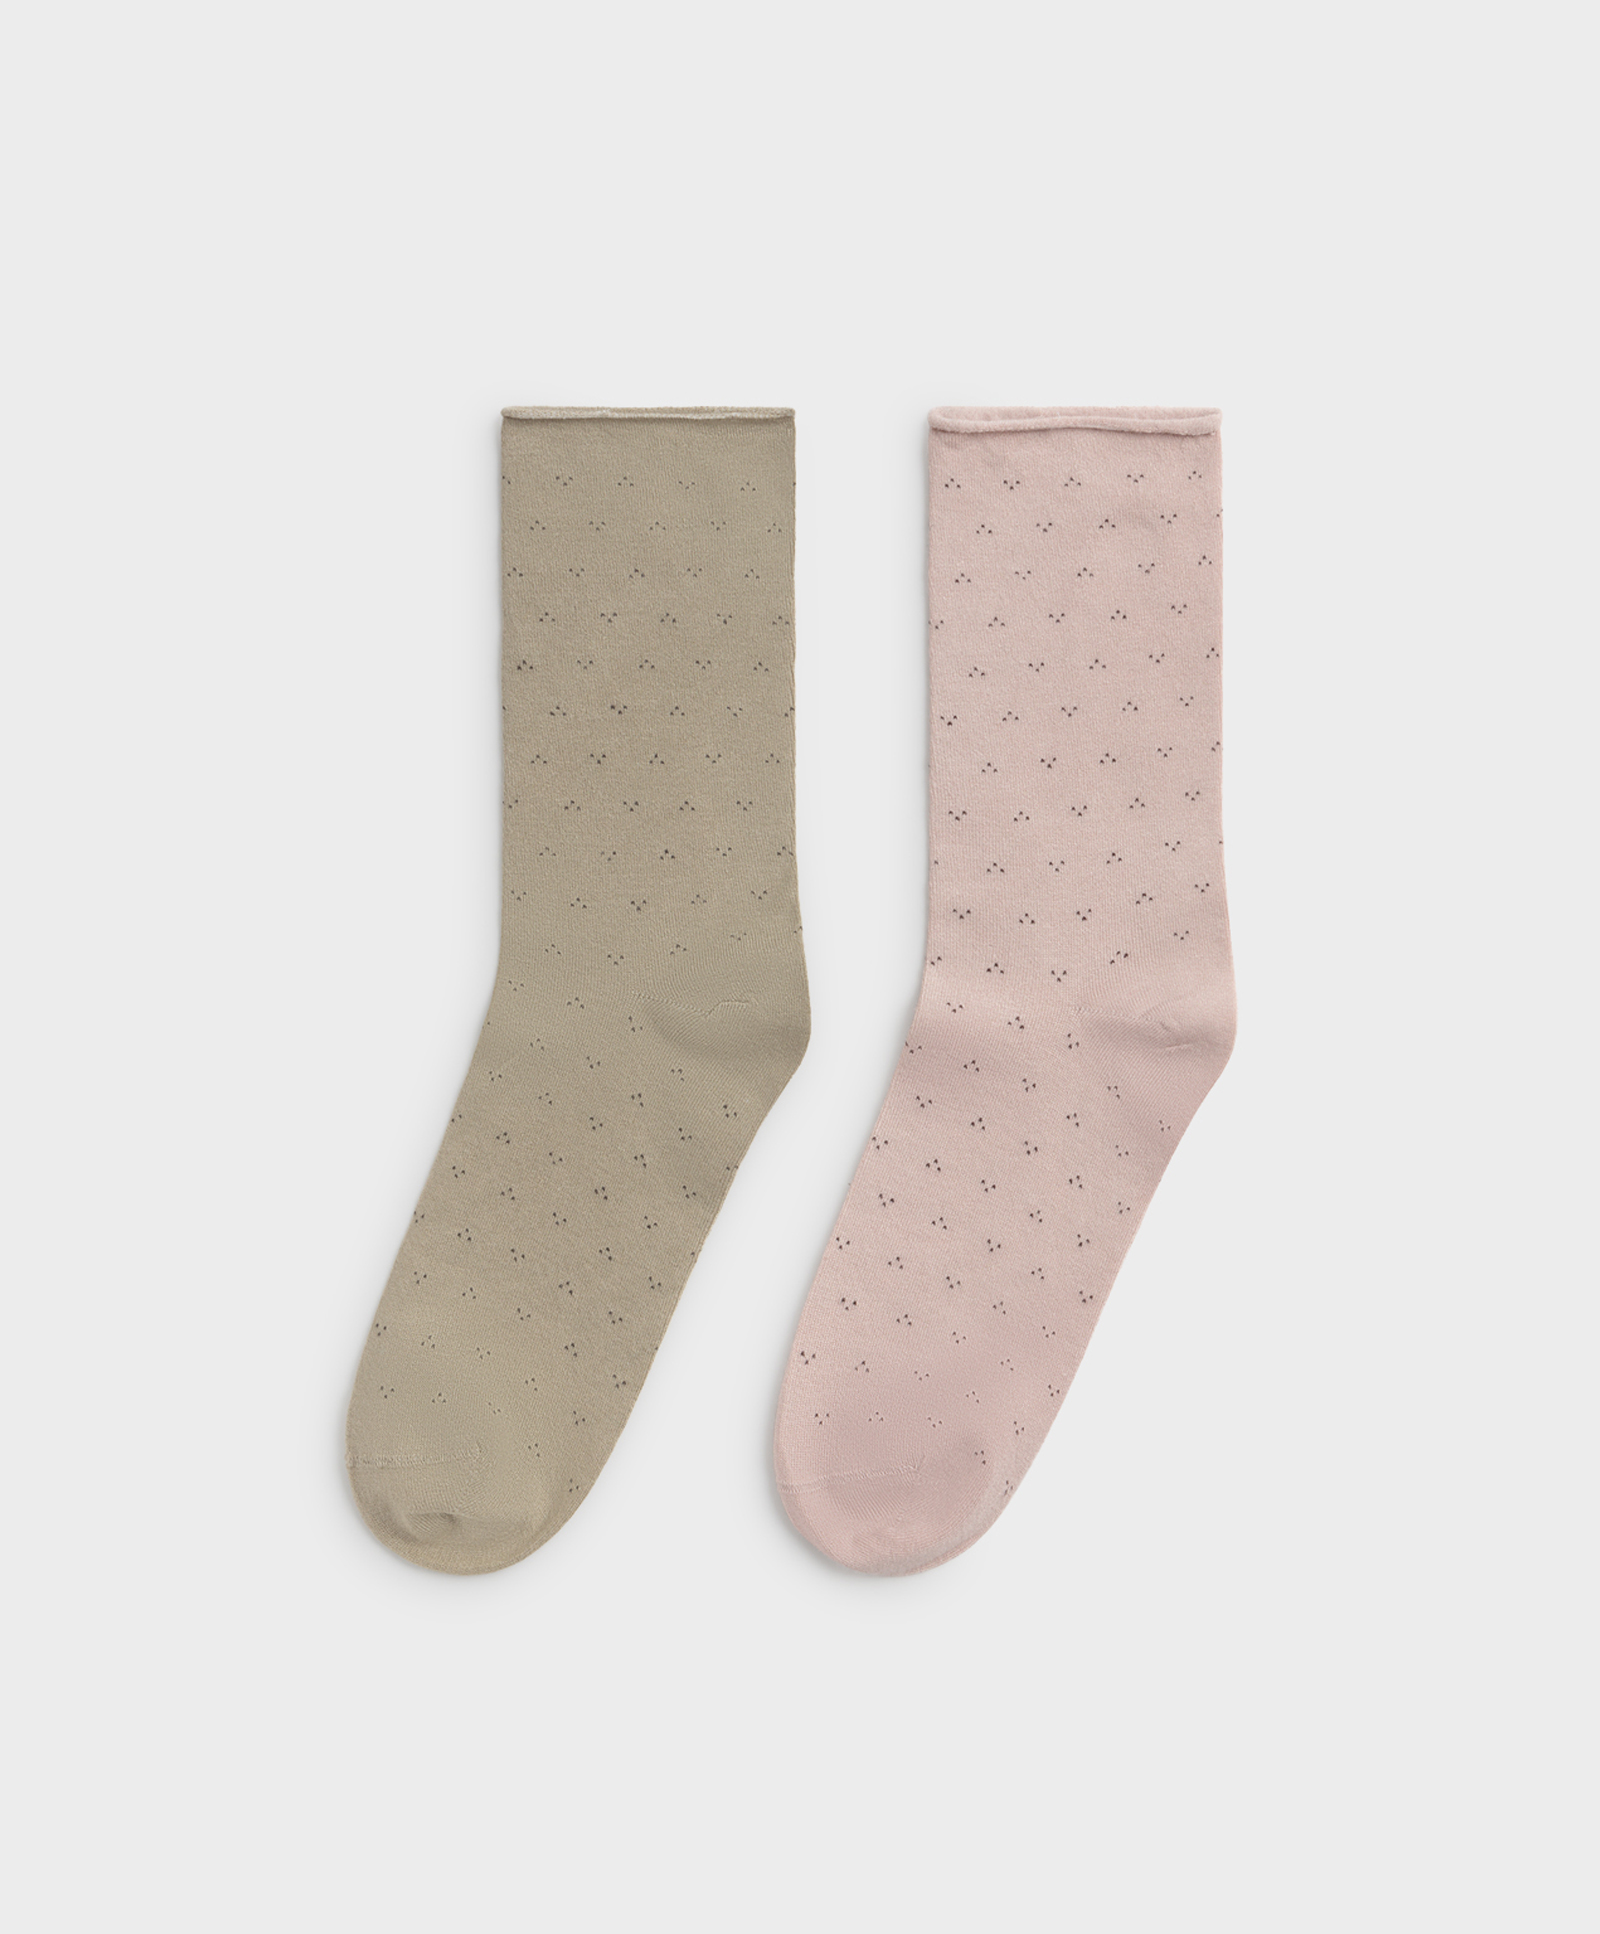 2 pairs of medium soft touch micromodal fantasy socks